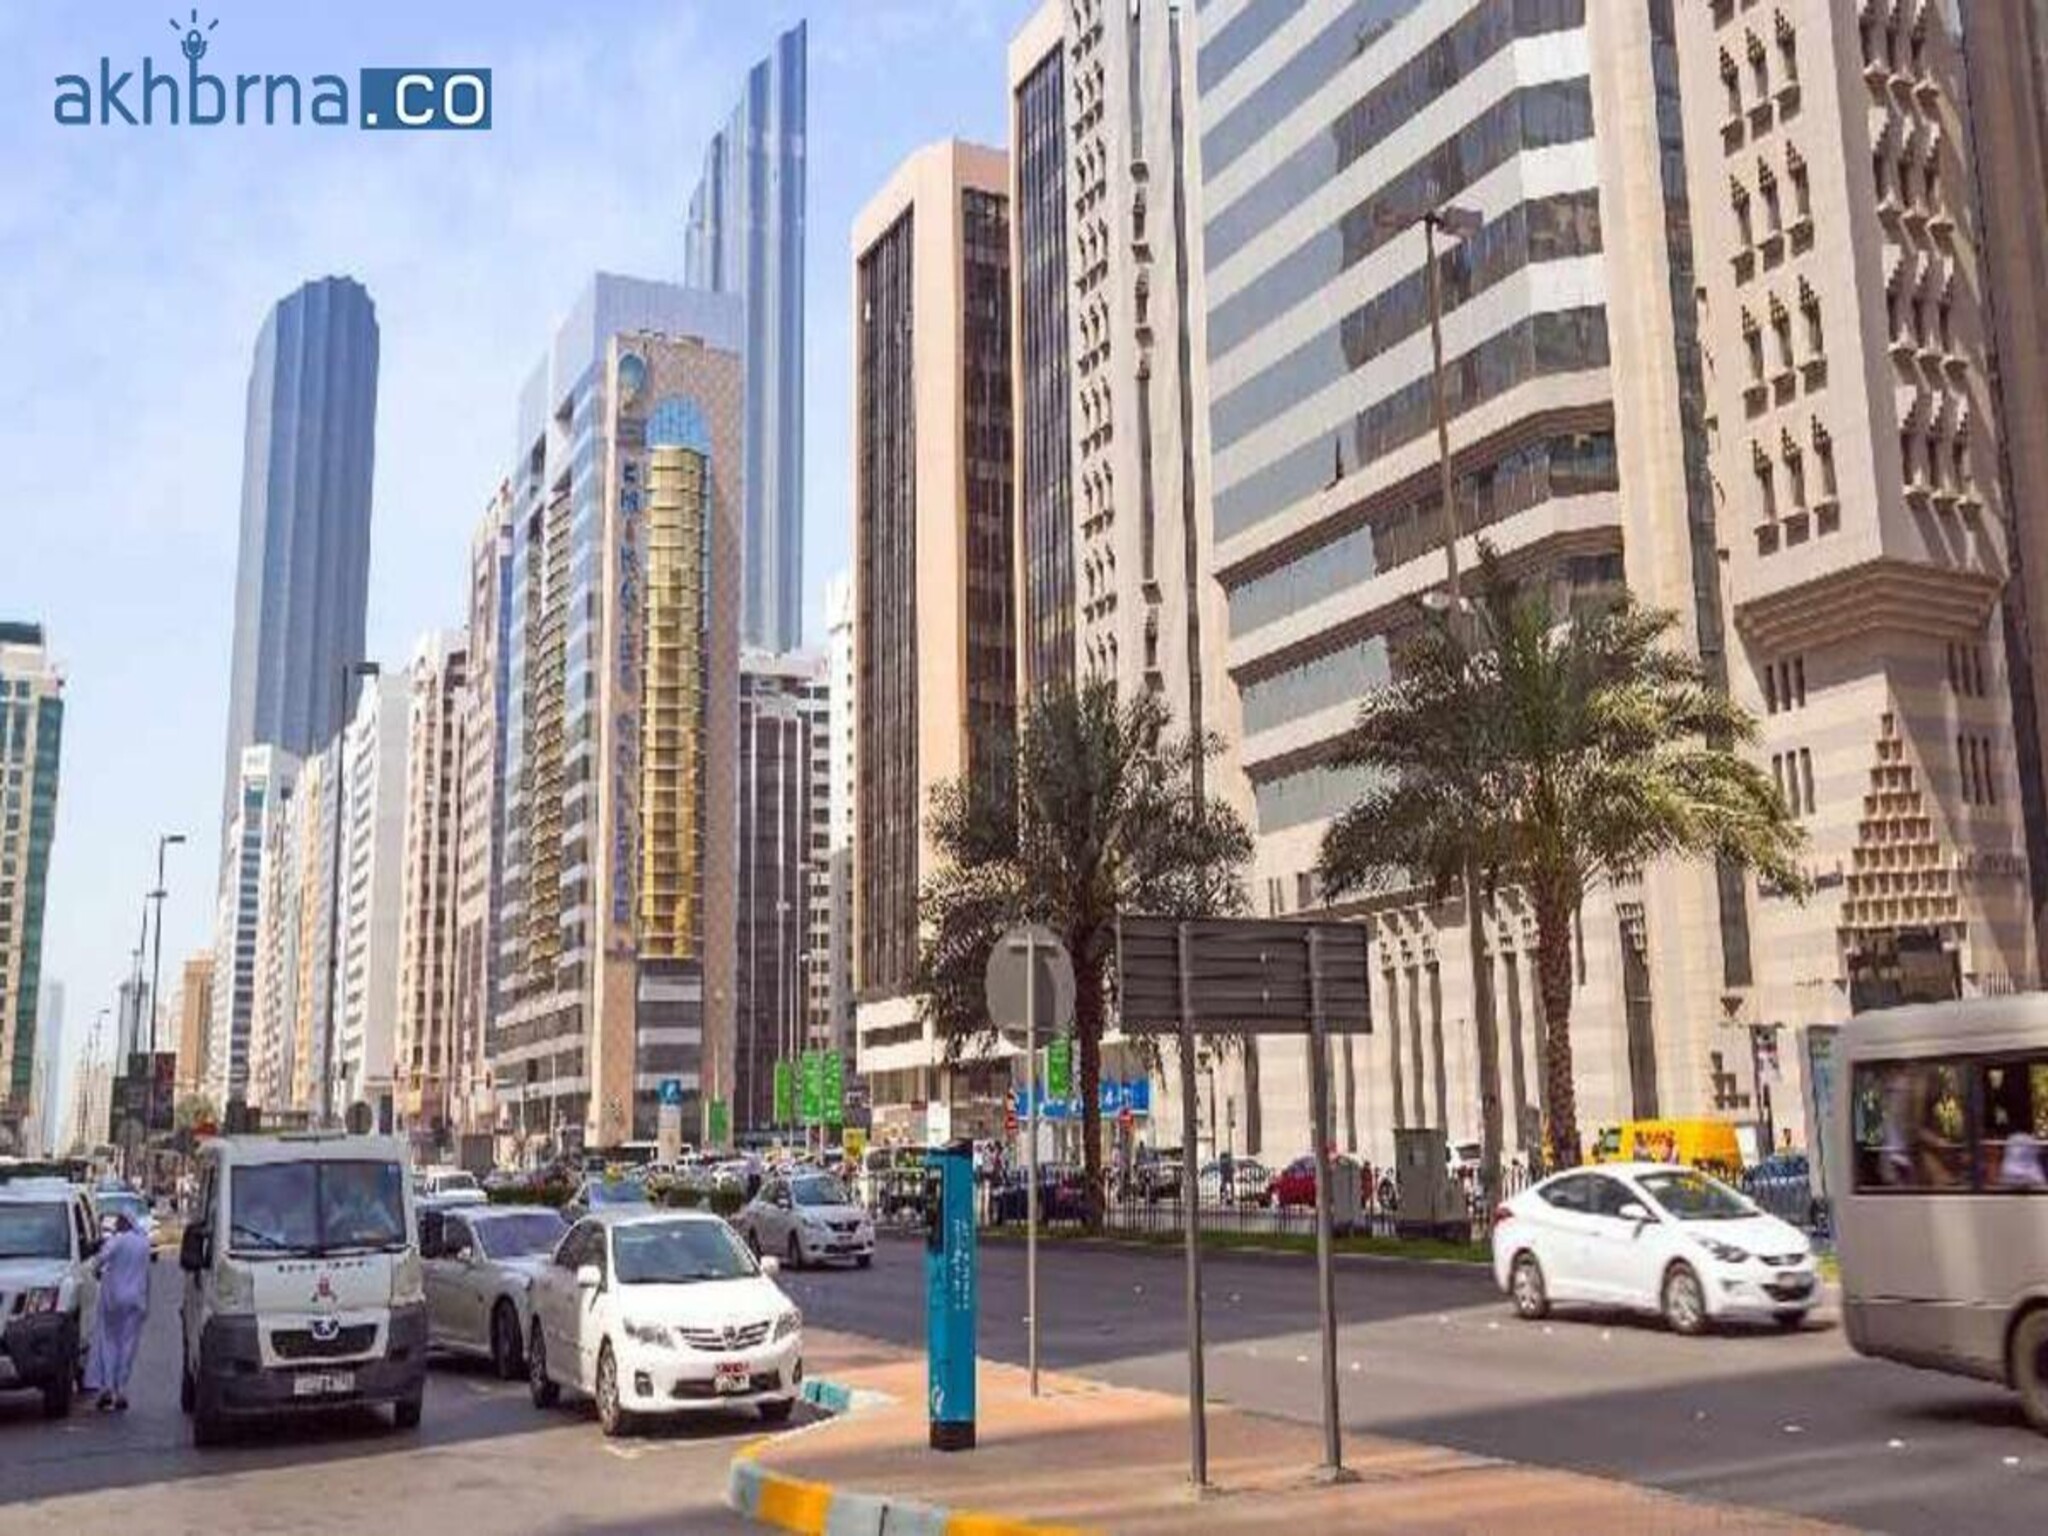 UAE announces Free parking timings across emirates during Eid Al Fitr break